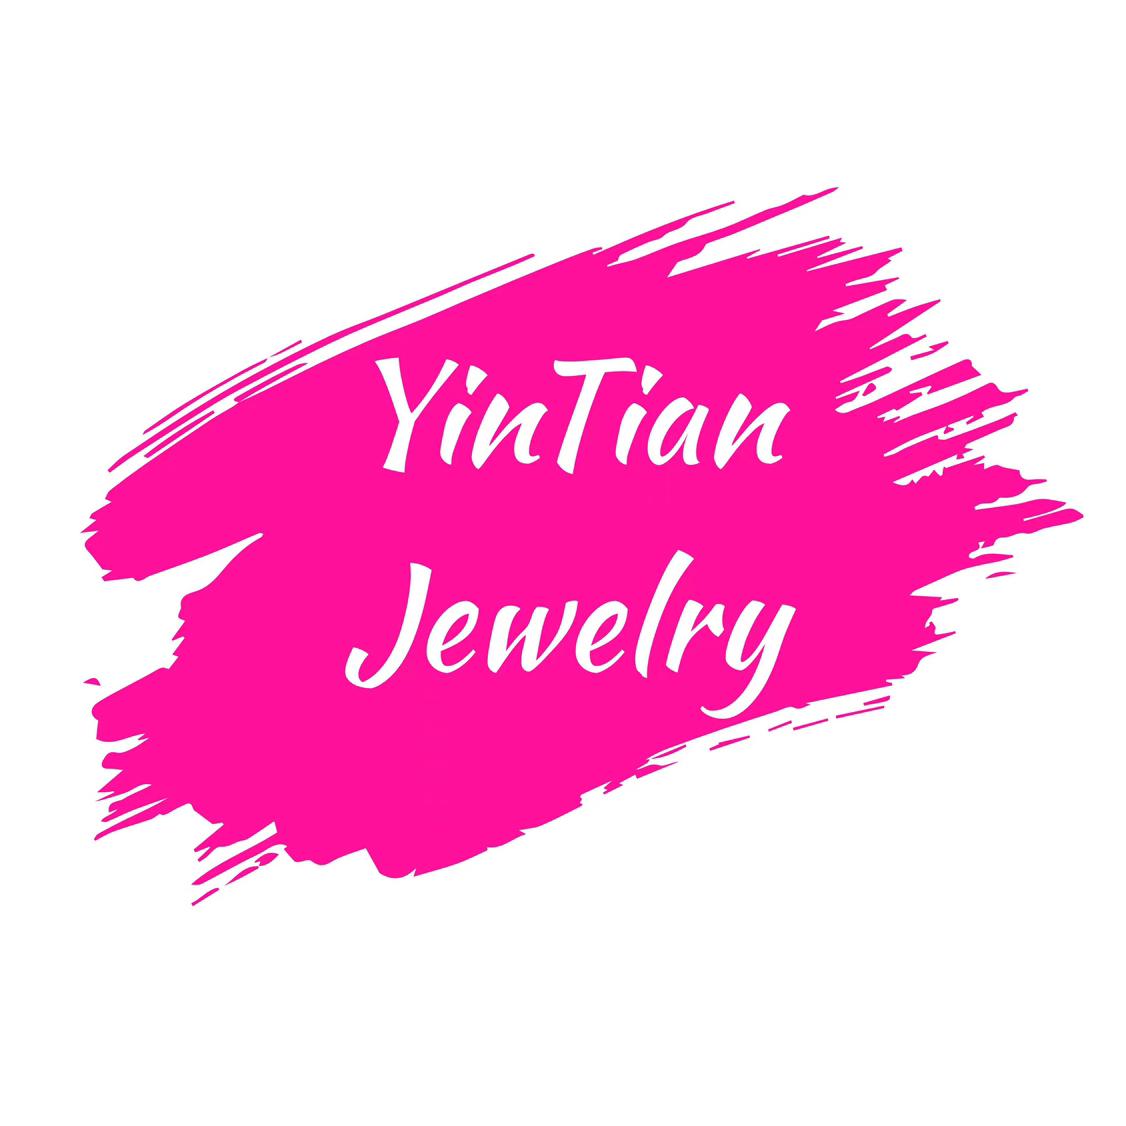 YinTianjewelry's images